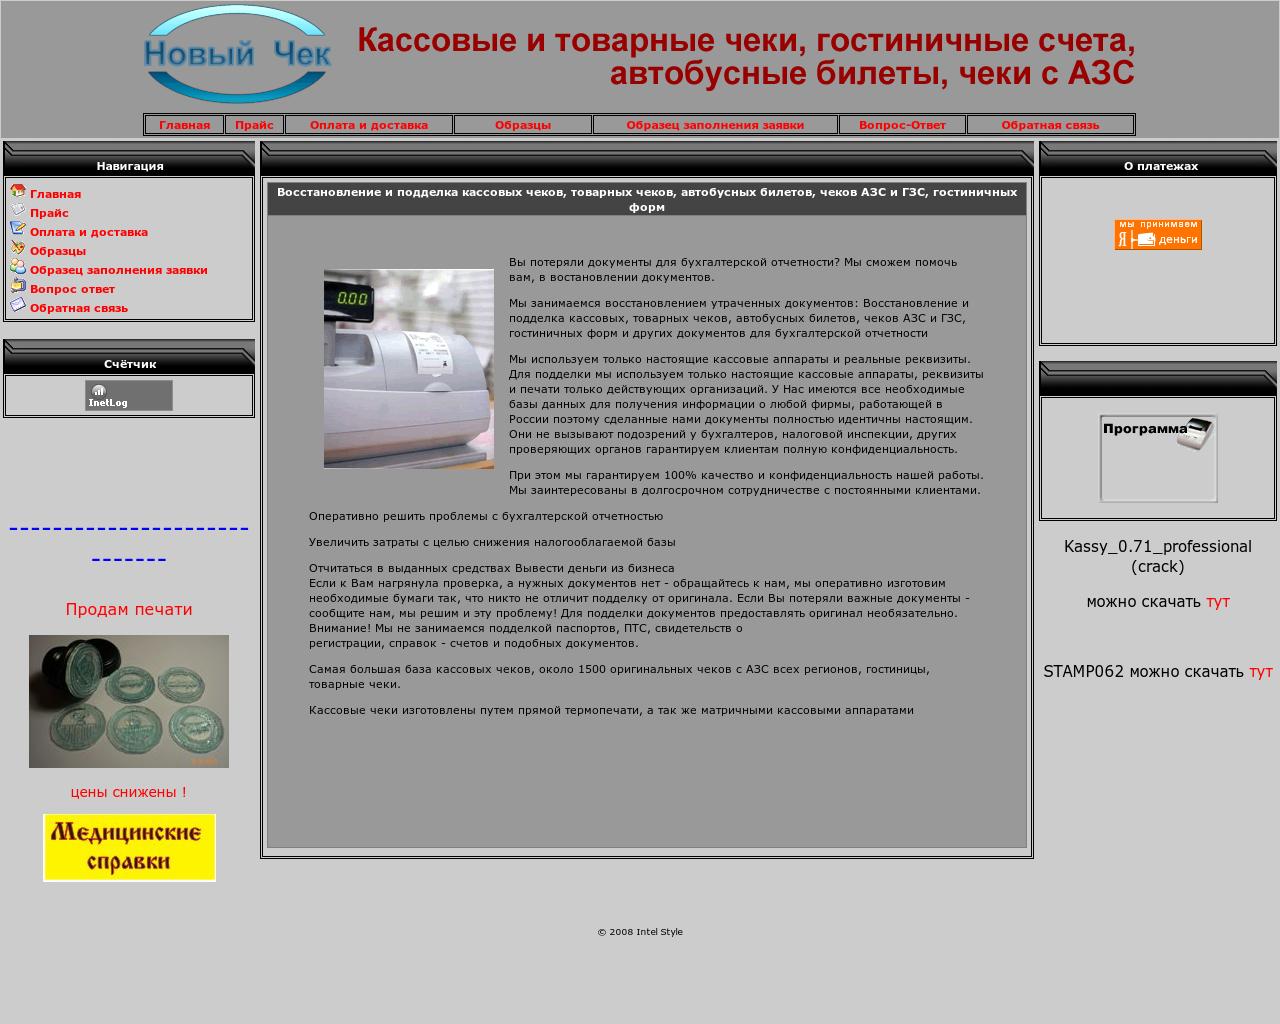 Изображение сайта newchek.ru в разрешении 1280x1024